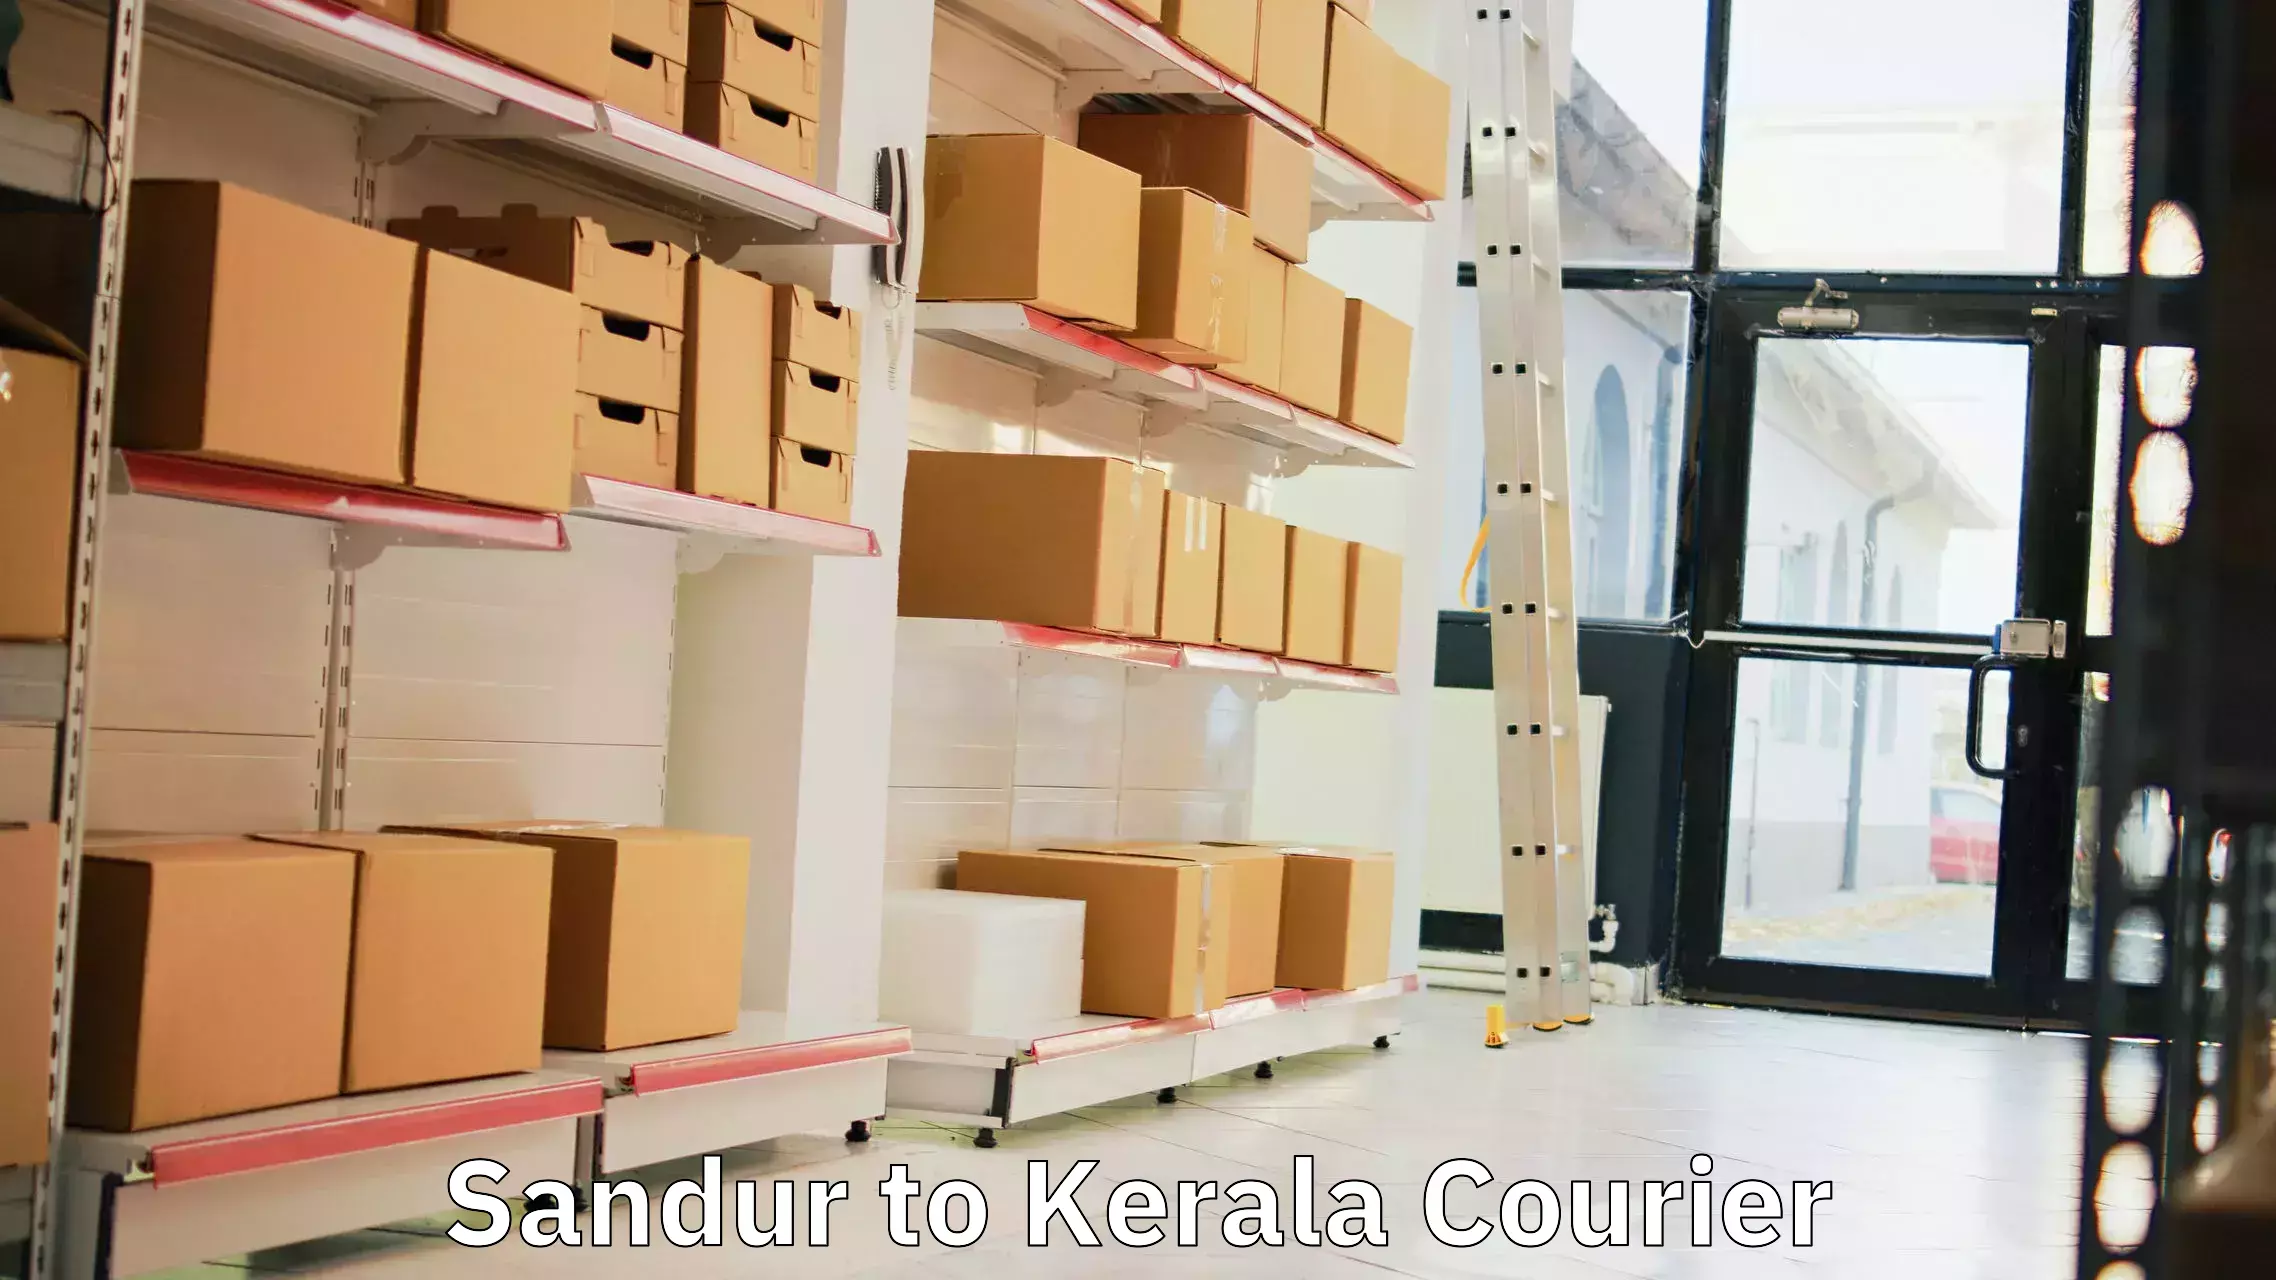 Doorstep delivery service Sandur to Kerala